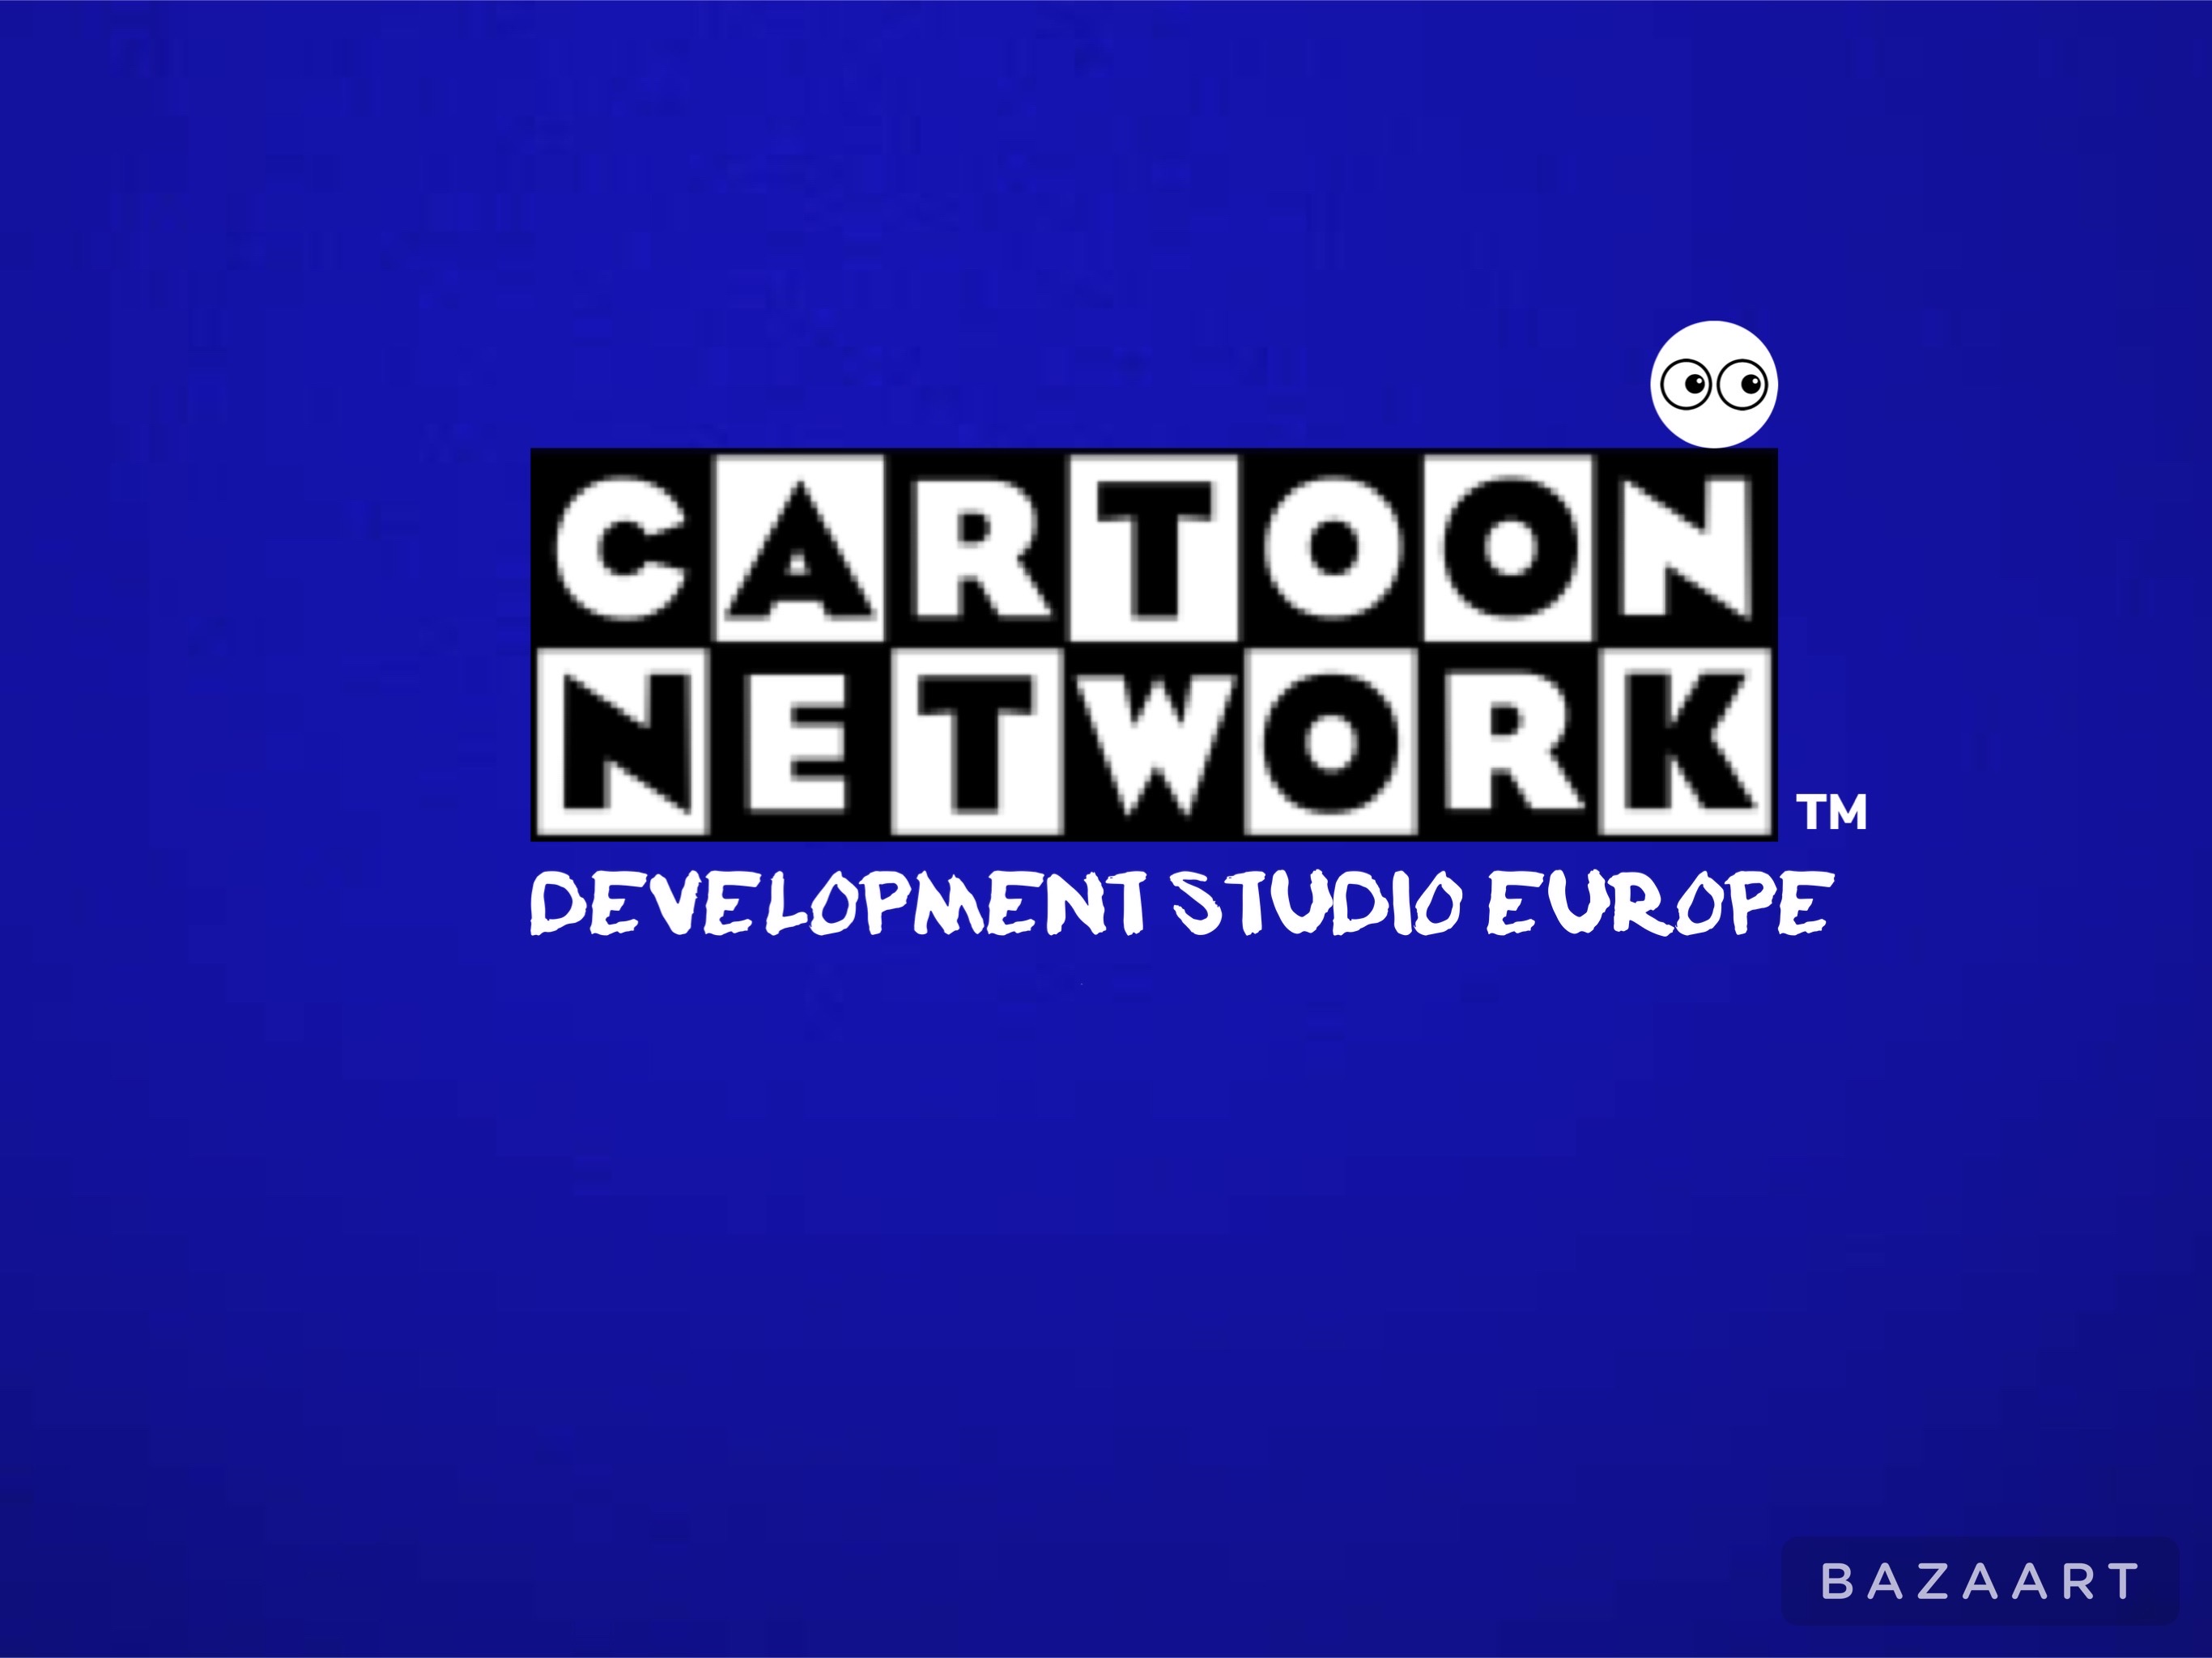 What If Cartoon Network Development Studios Europe by remonne04 on  DeviantArt